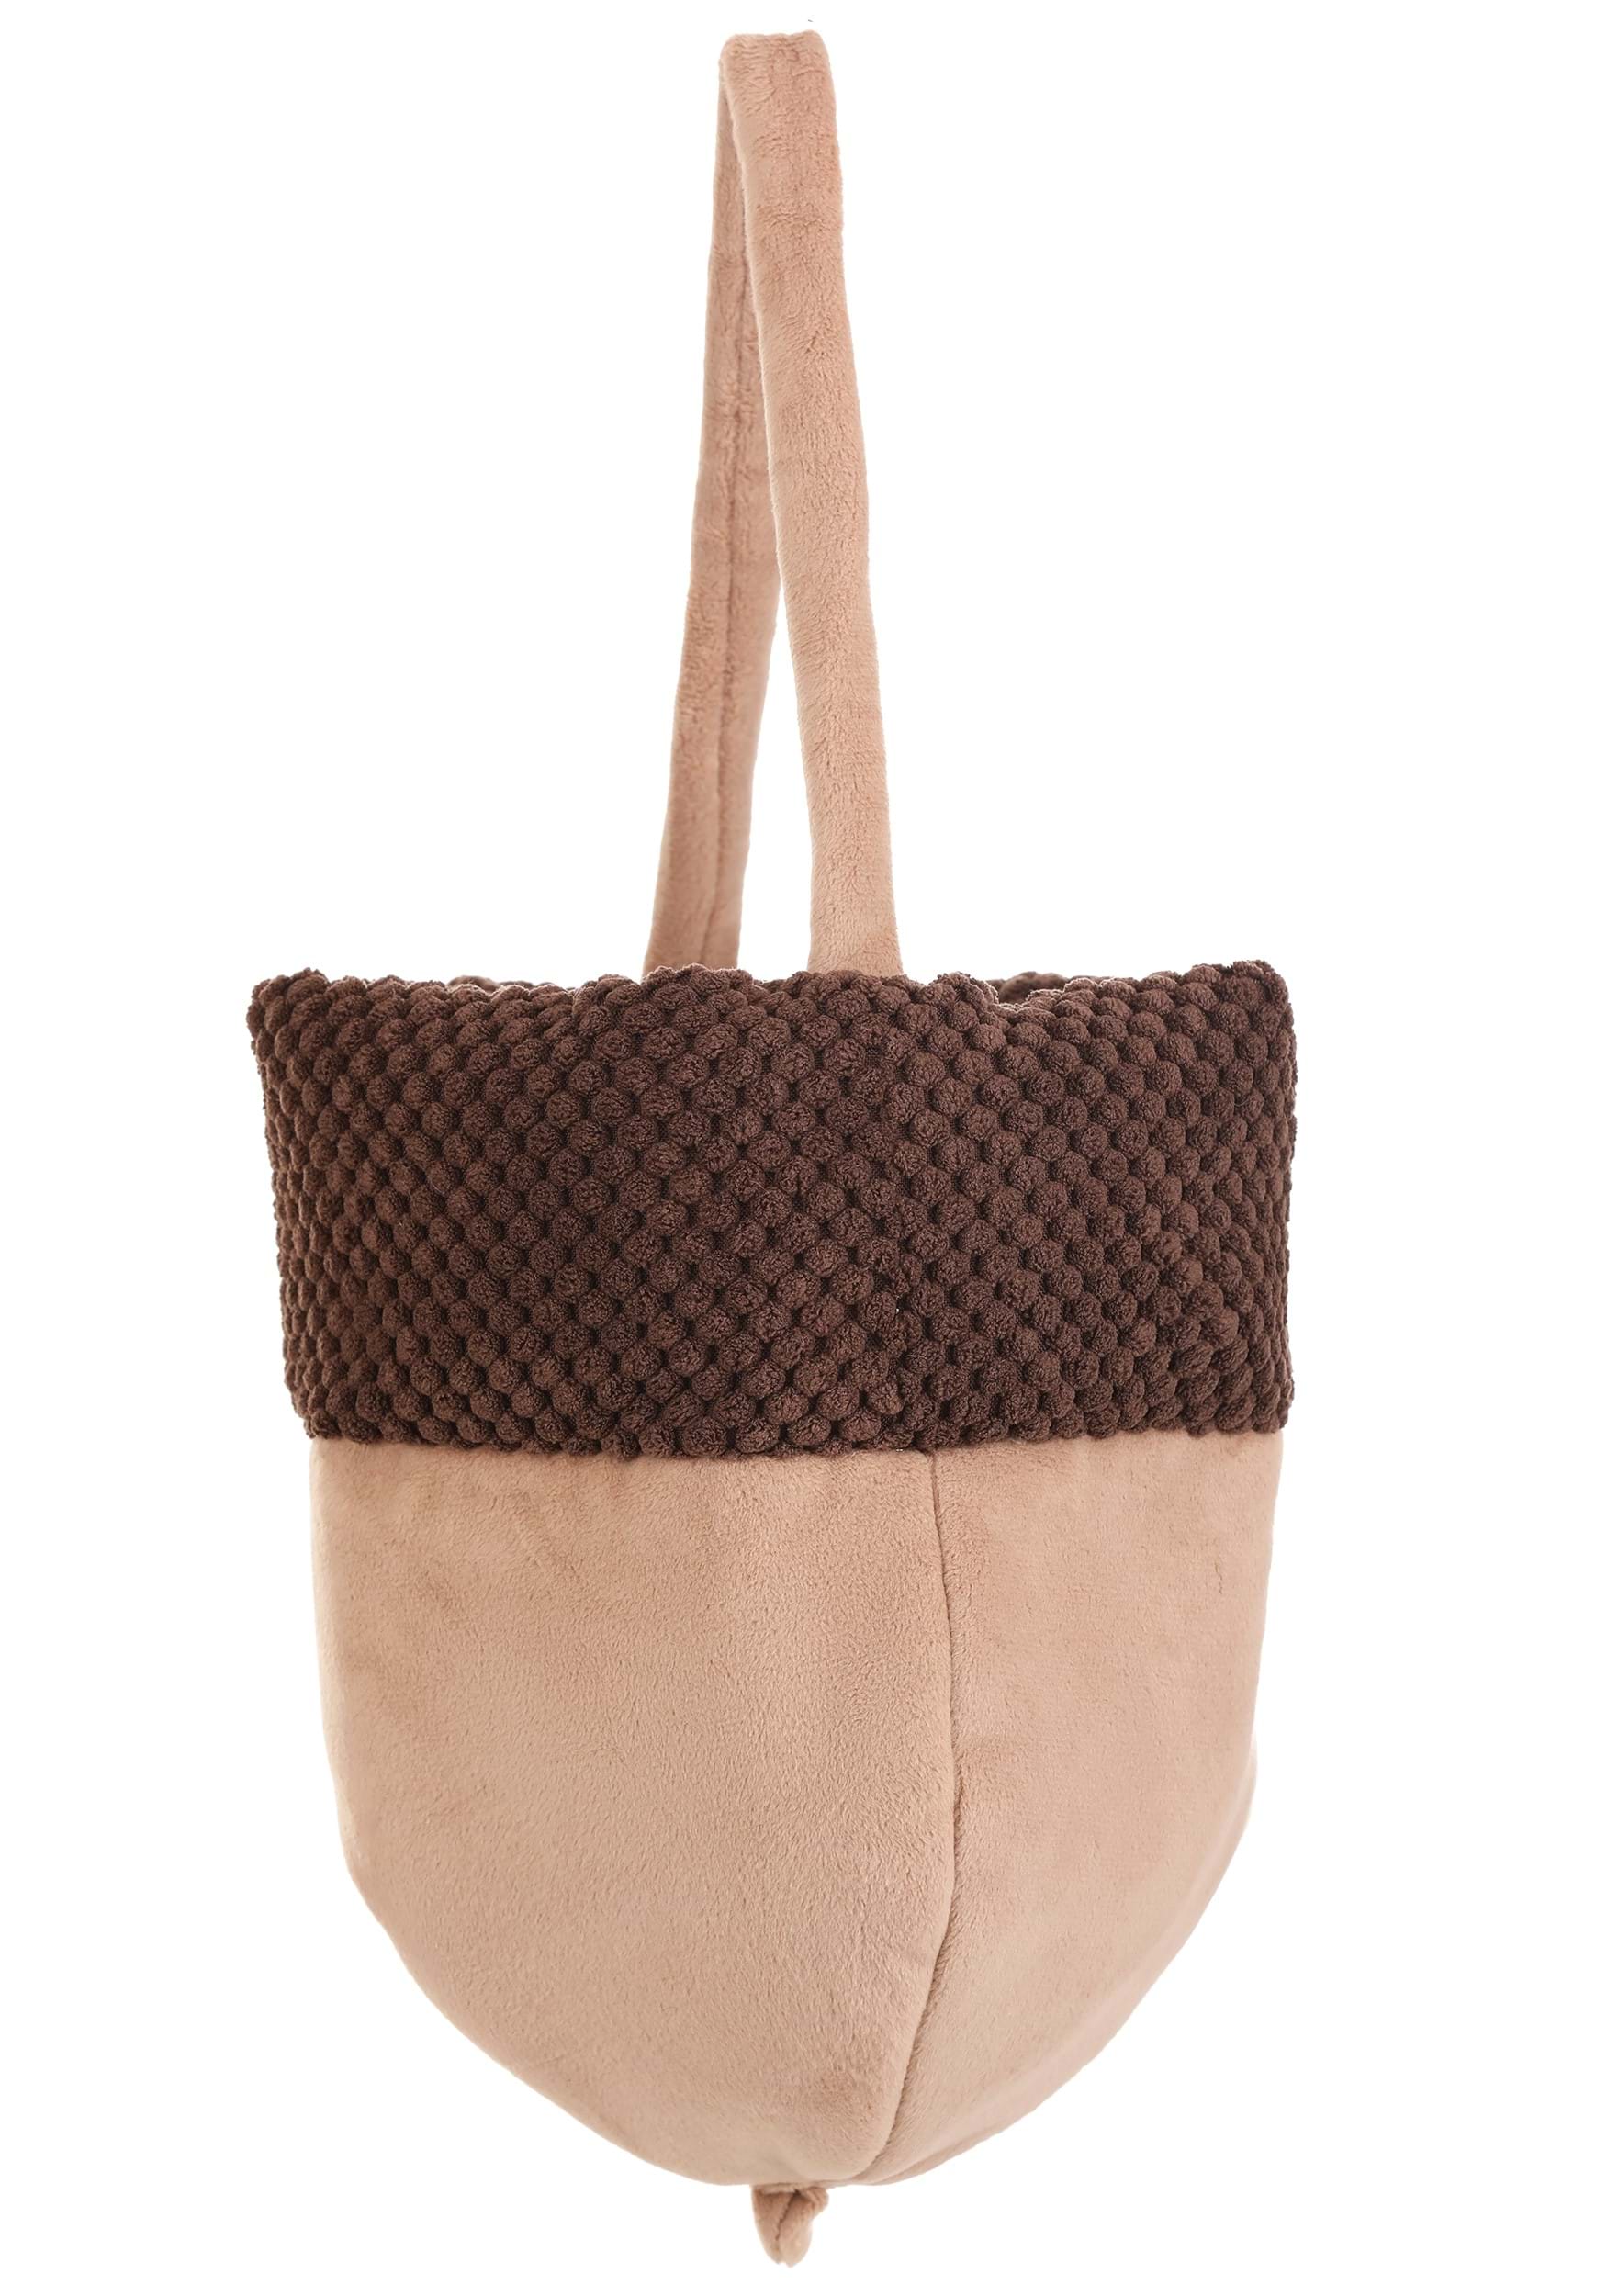 Ravelry: Acorn pouch bag pattern by Fabiana Canu